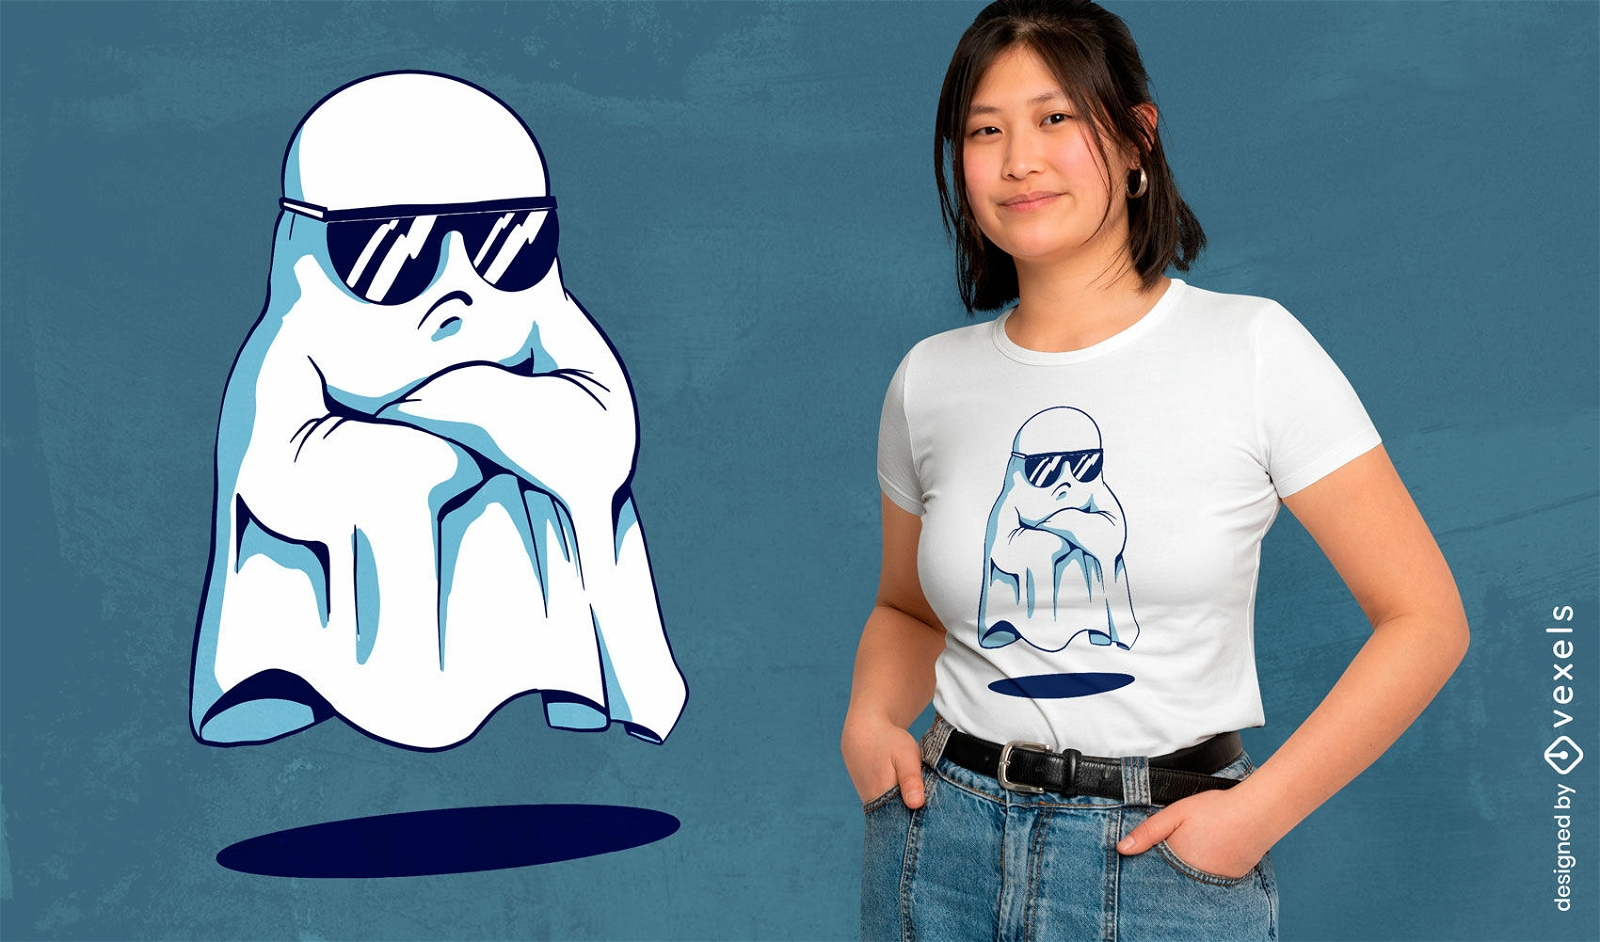 Genial diseño de camiseta de fantasma enojado.